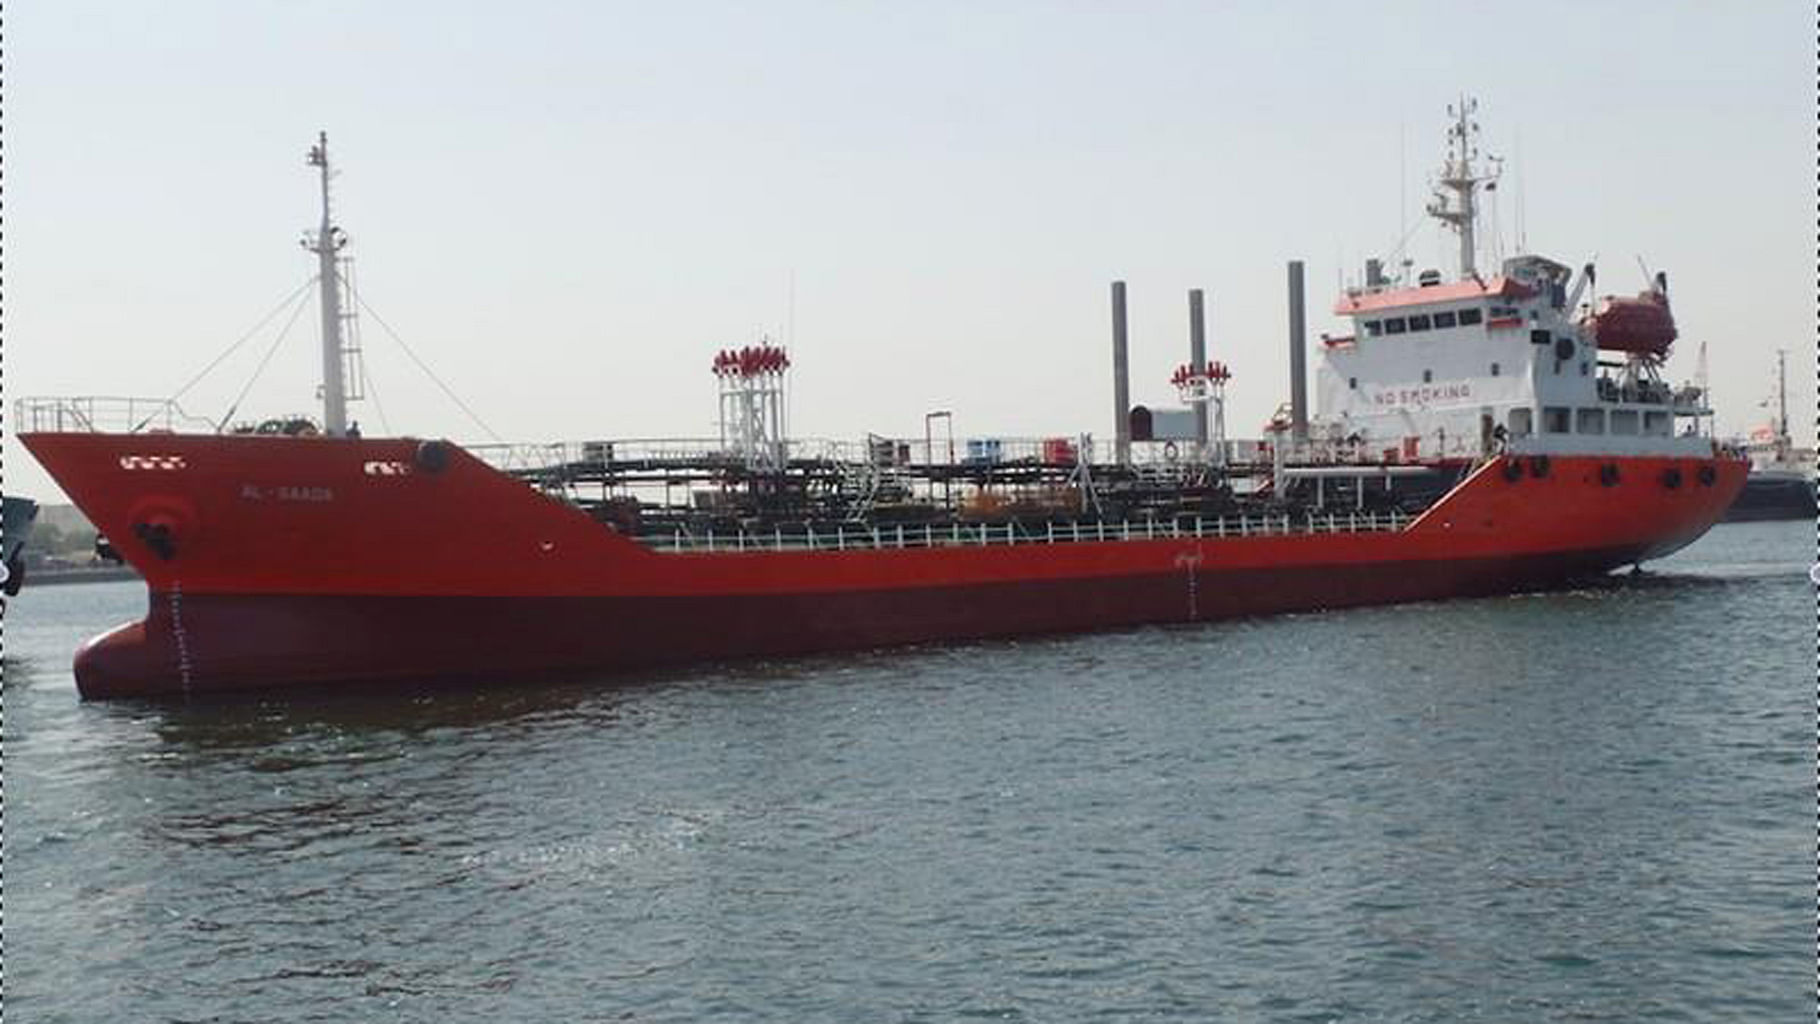 Al-Sadda vessel on which accident took place. (Photo Courtesy: <a href="http://www.marinetraffic.com/ee/photos/of/ships/shipid:466174/#forward">marinetraffice.com/Etihad</a>)